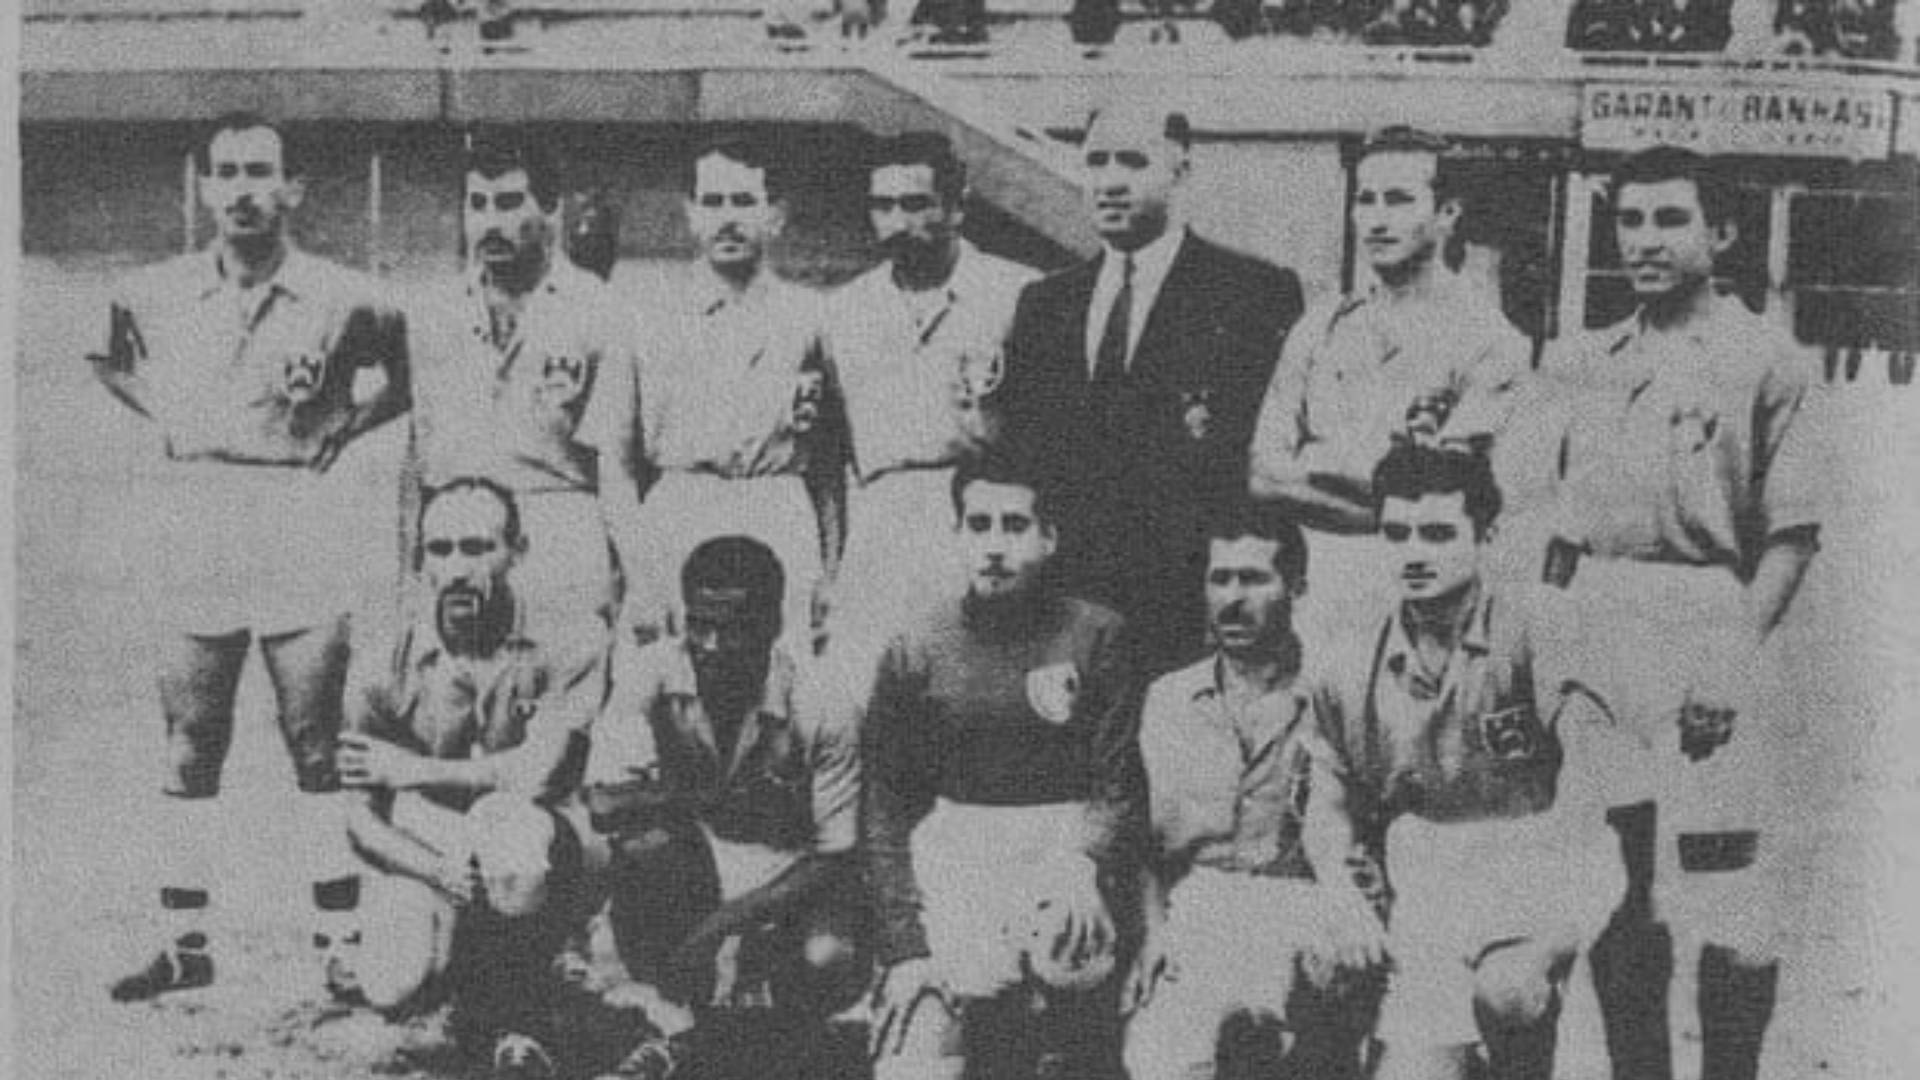  The Iraq team lining up before playing Ankara XI in 1951. Photograph: Hassanin Mubarak